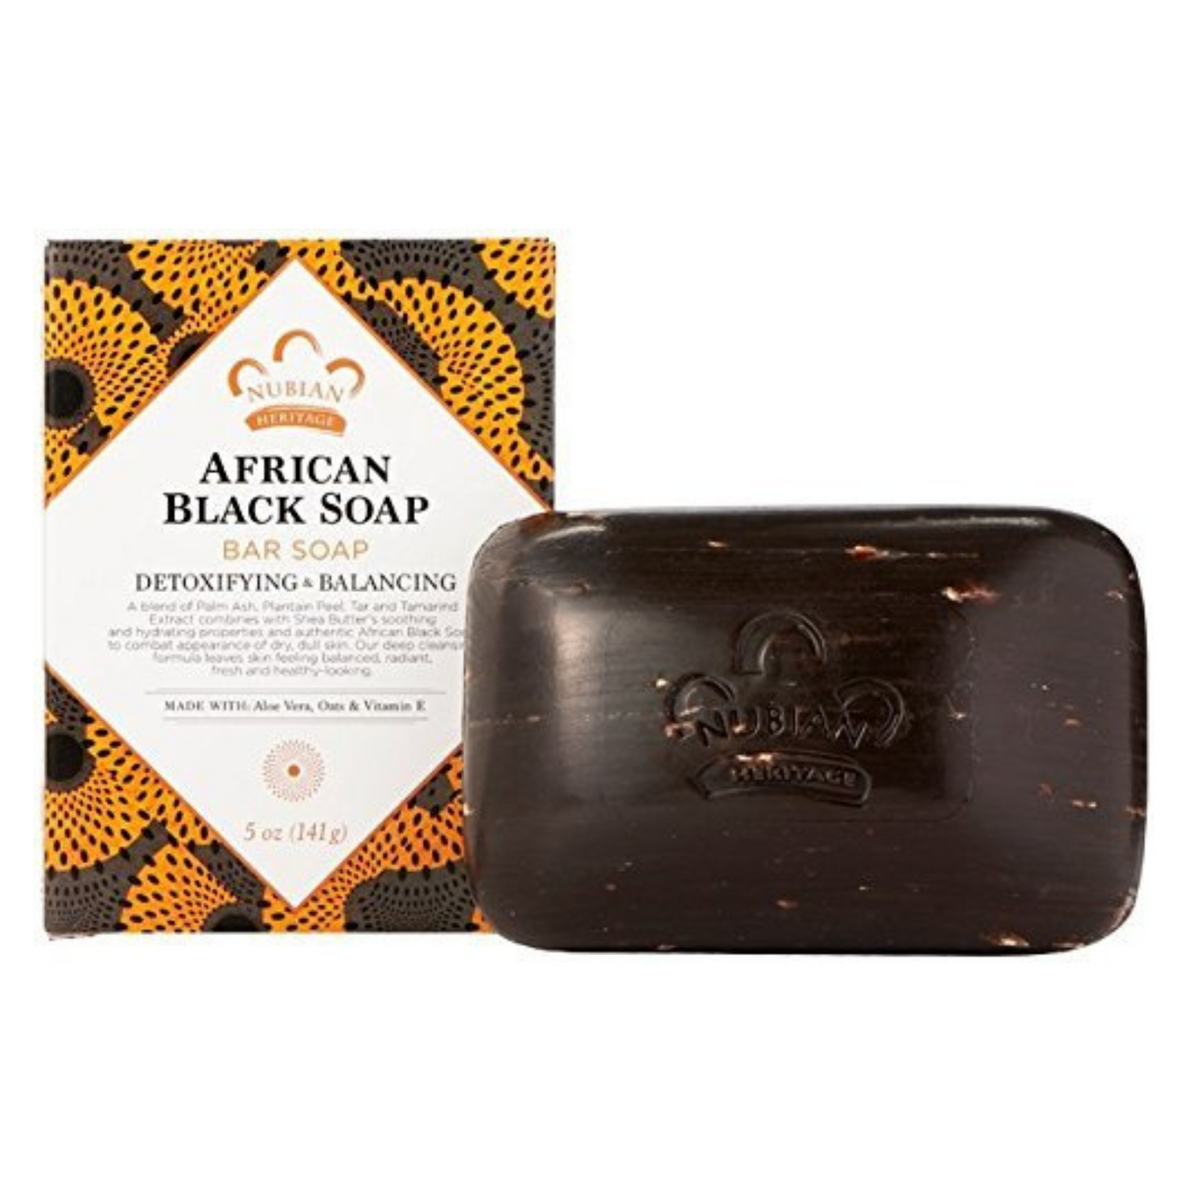 Primary Image of Nubian Heritage African Black Bar Soap (5 oz) 